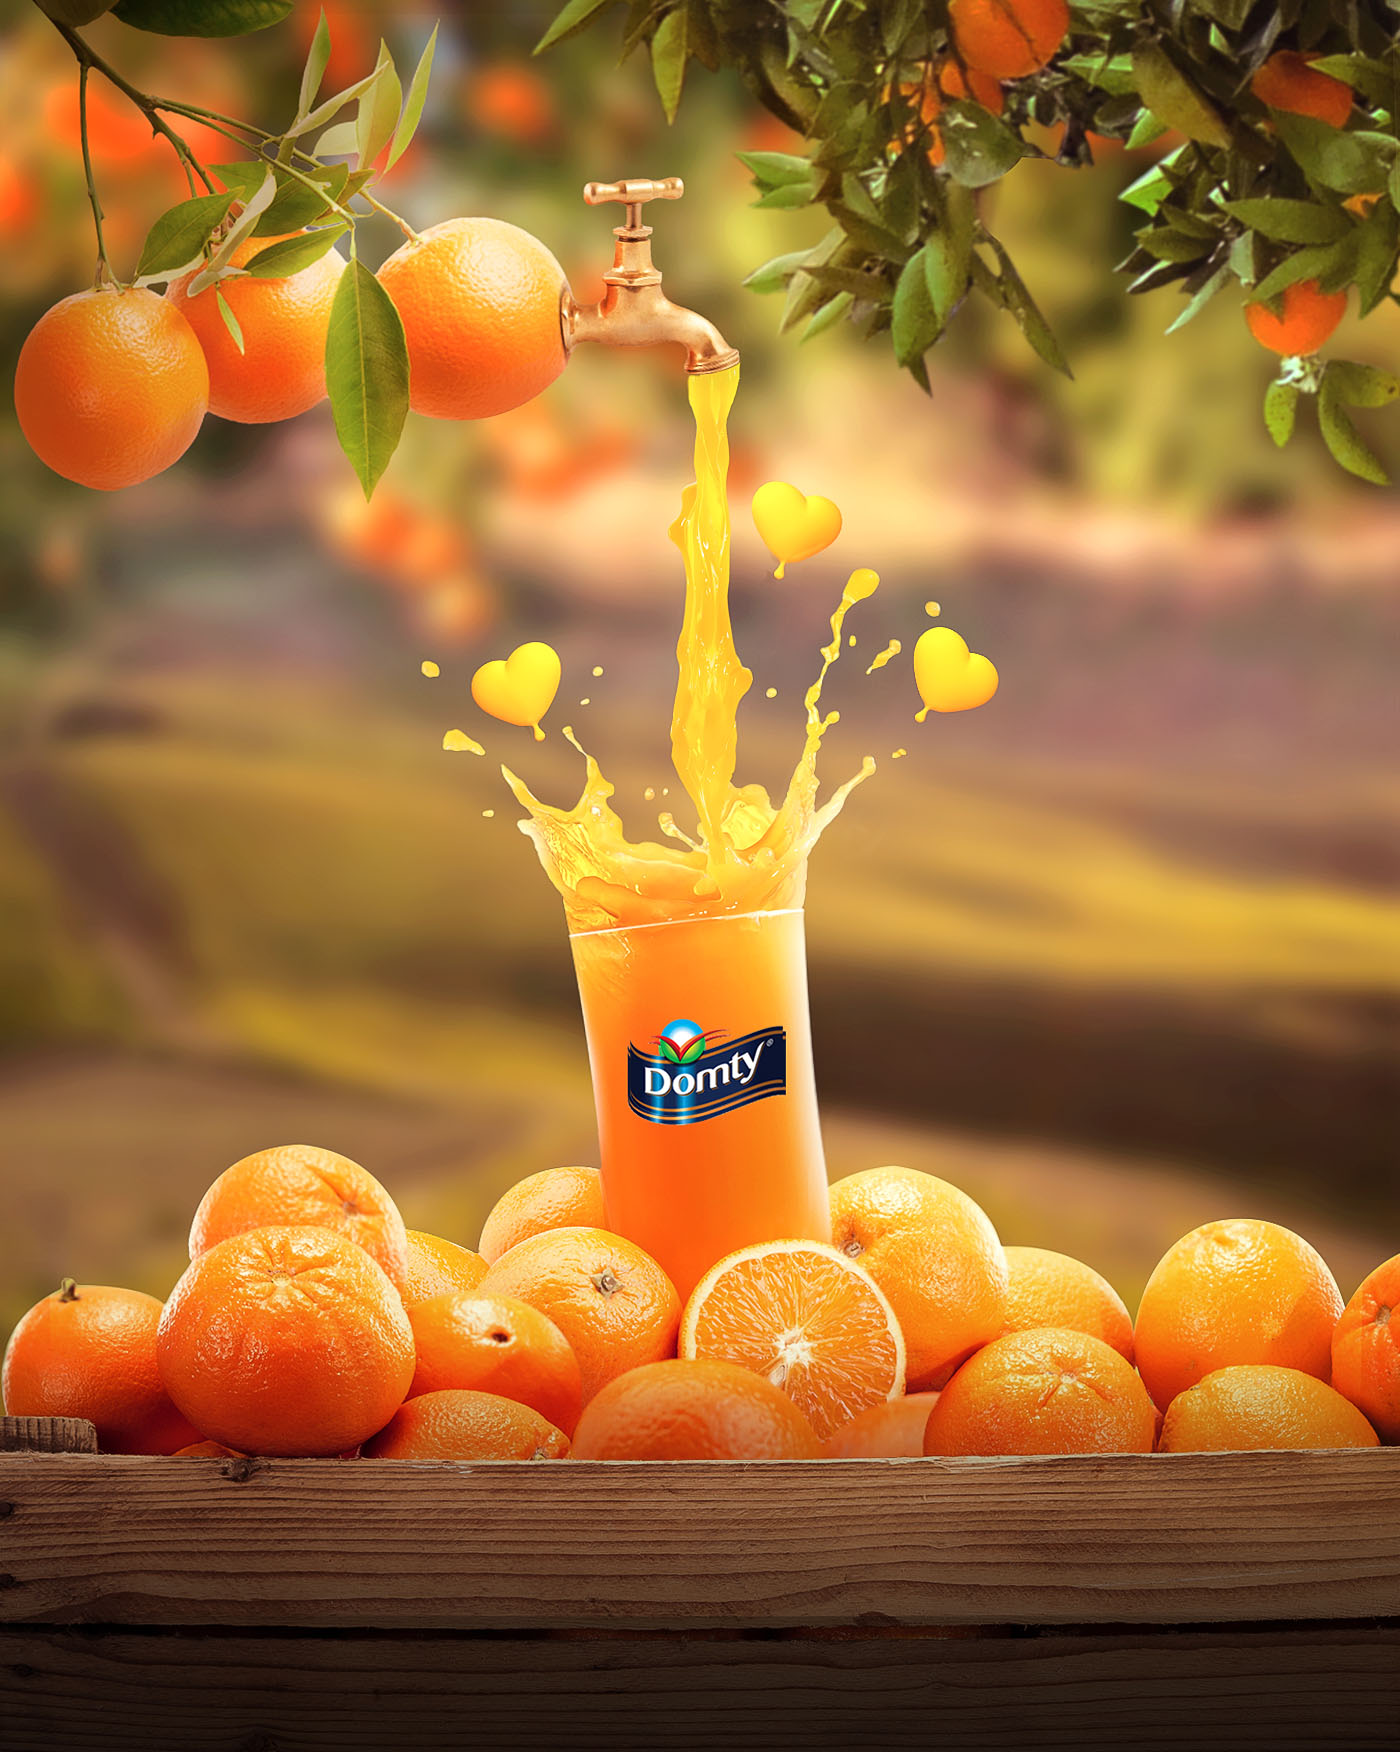 advertising design idea domty orange juice